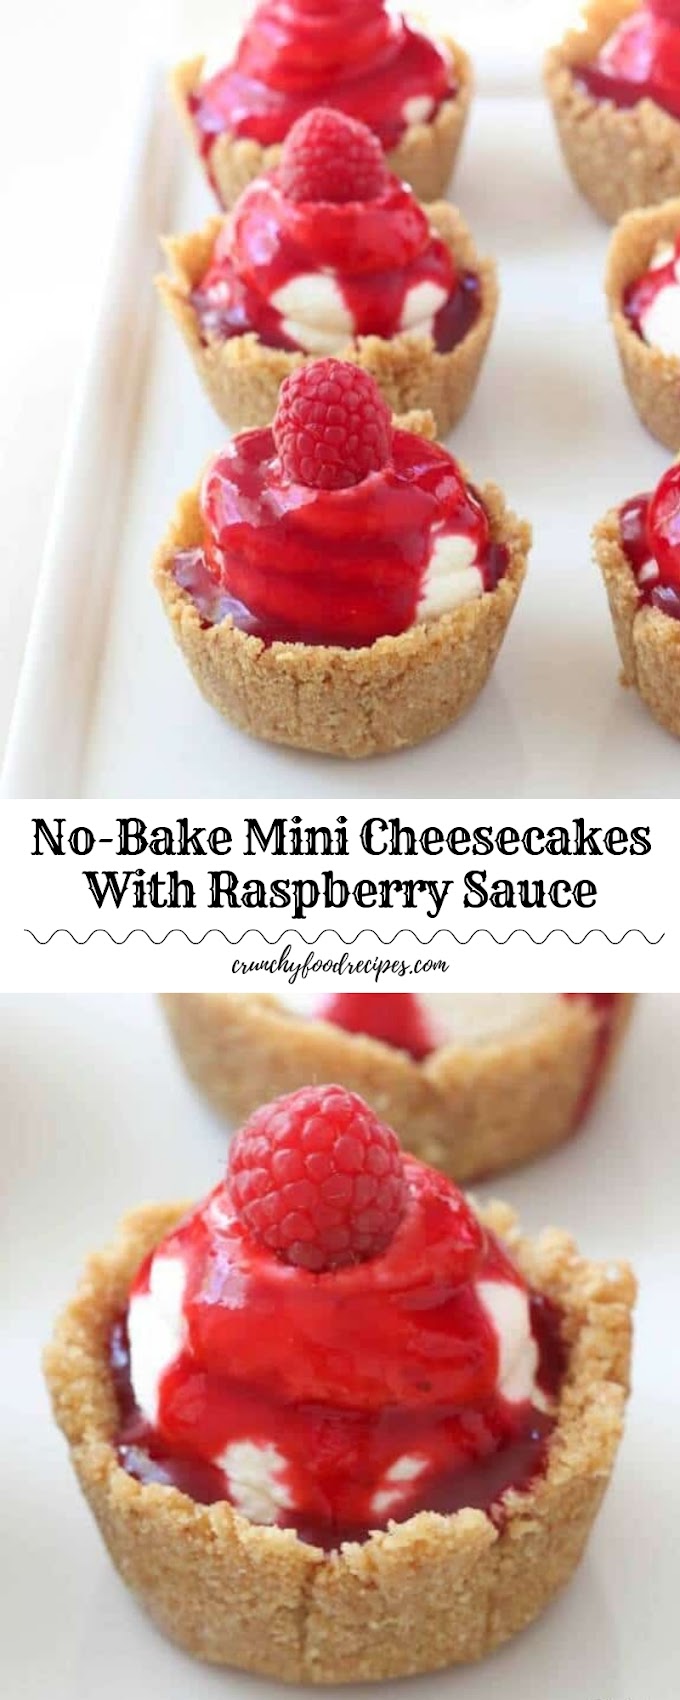 No-Bake Mini Cheesecakes With Raspberry Sauce #valentine #dessert